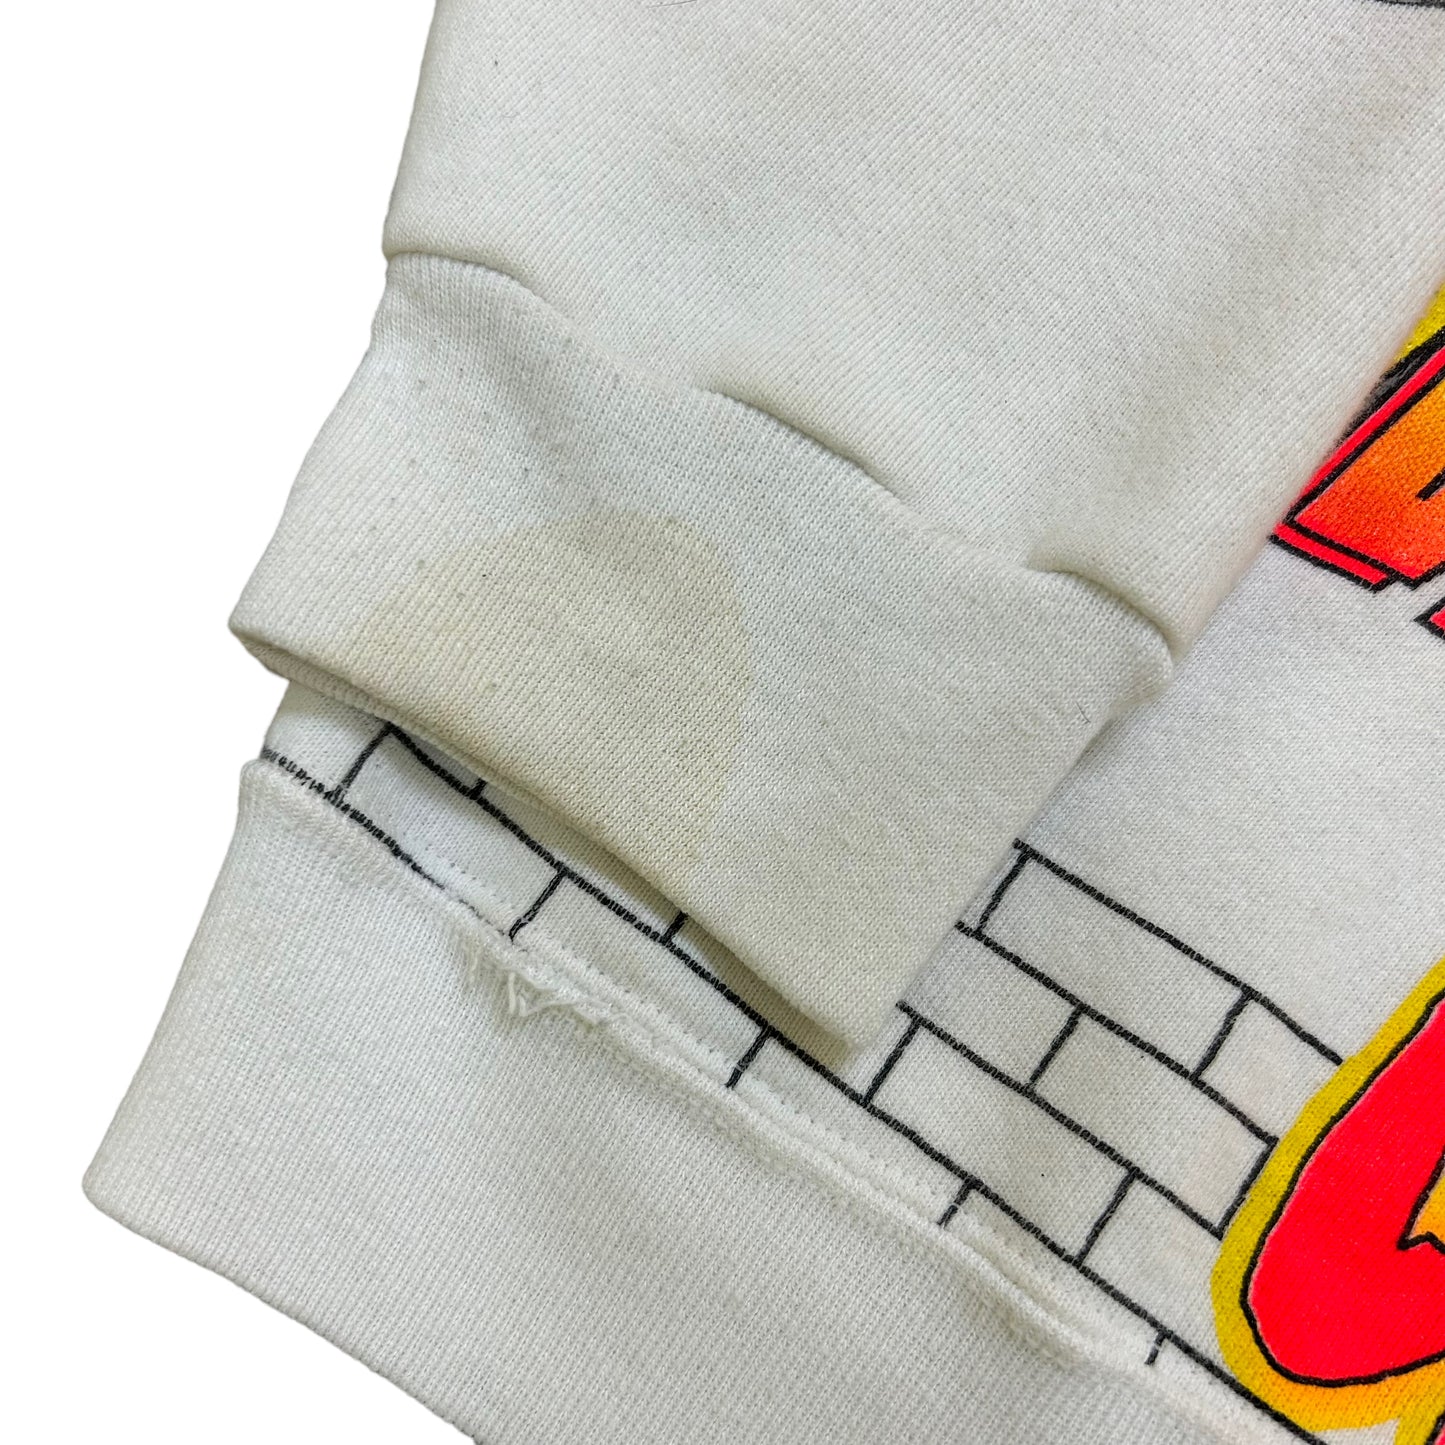 Vintage 1990s Ernie Irvan “Over The Wall Gang” All Over Print Crewneck Sweatshirt - Size Medium (Fits Large)